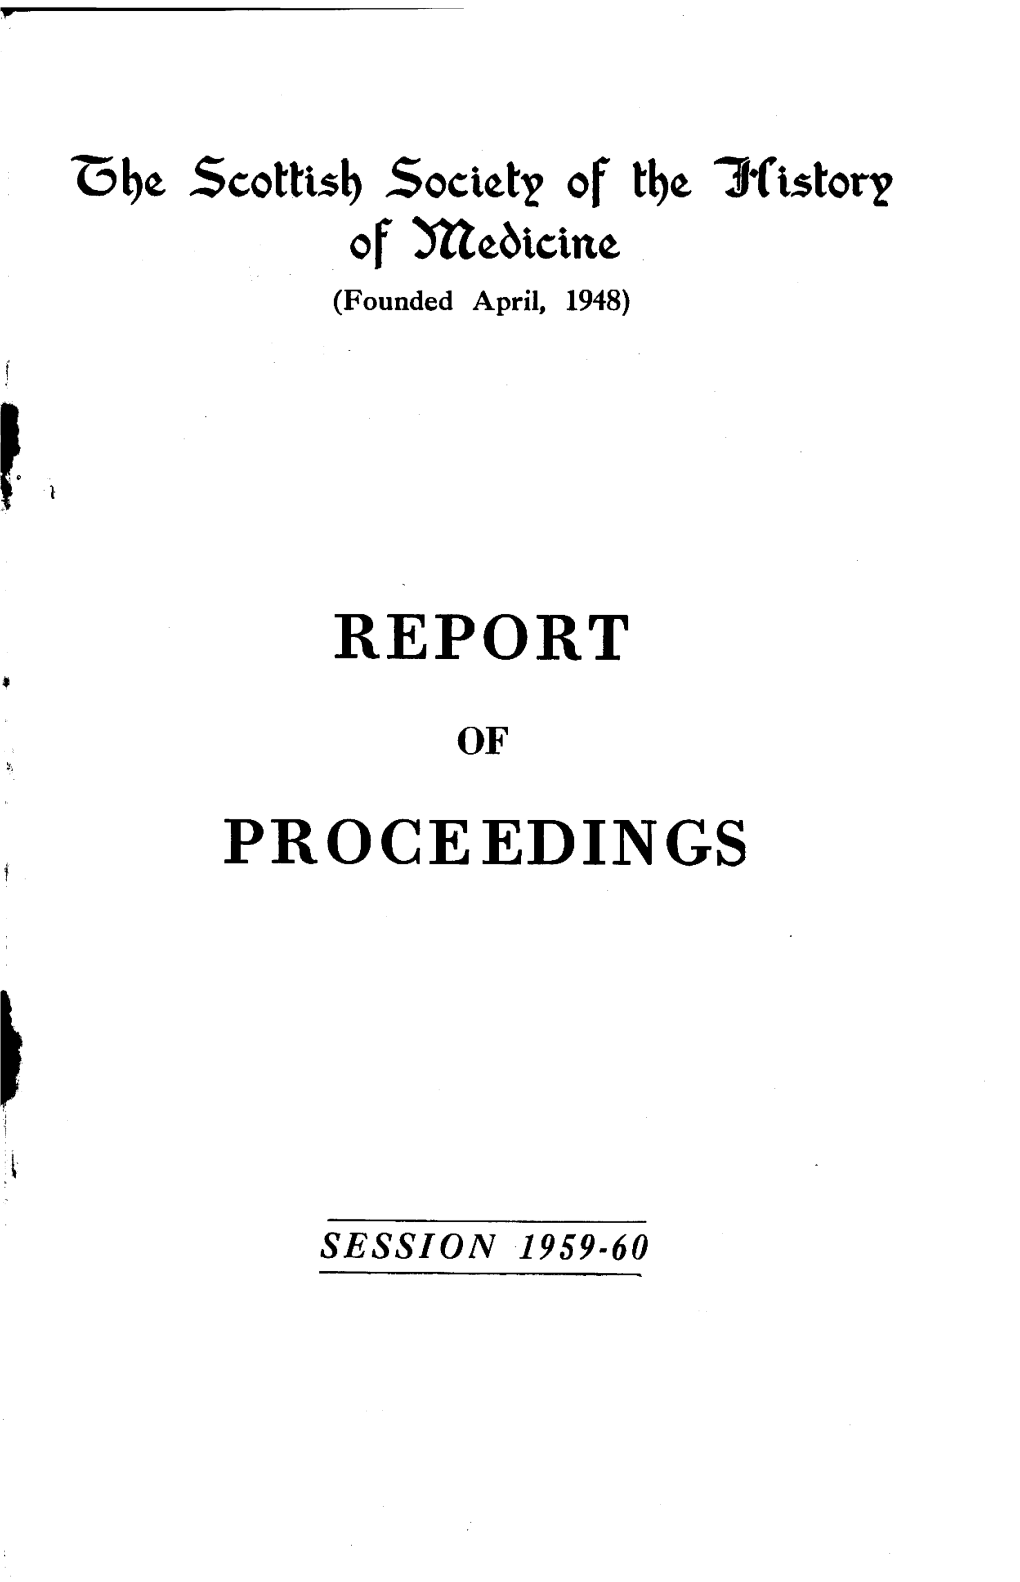 Proceedings for 1959-60